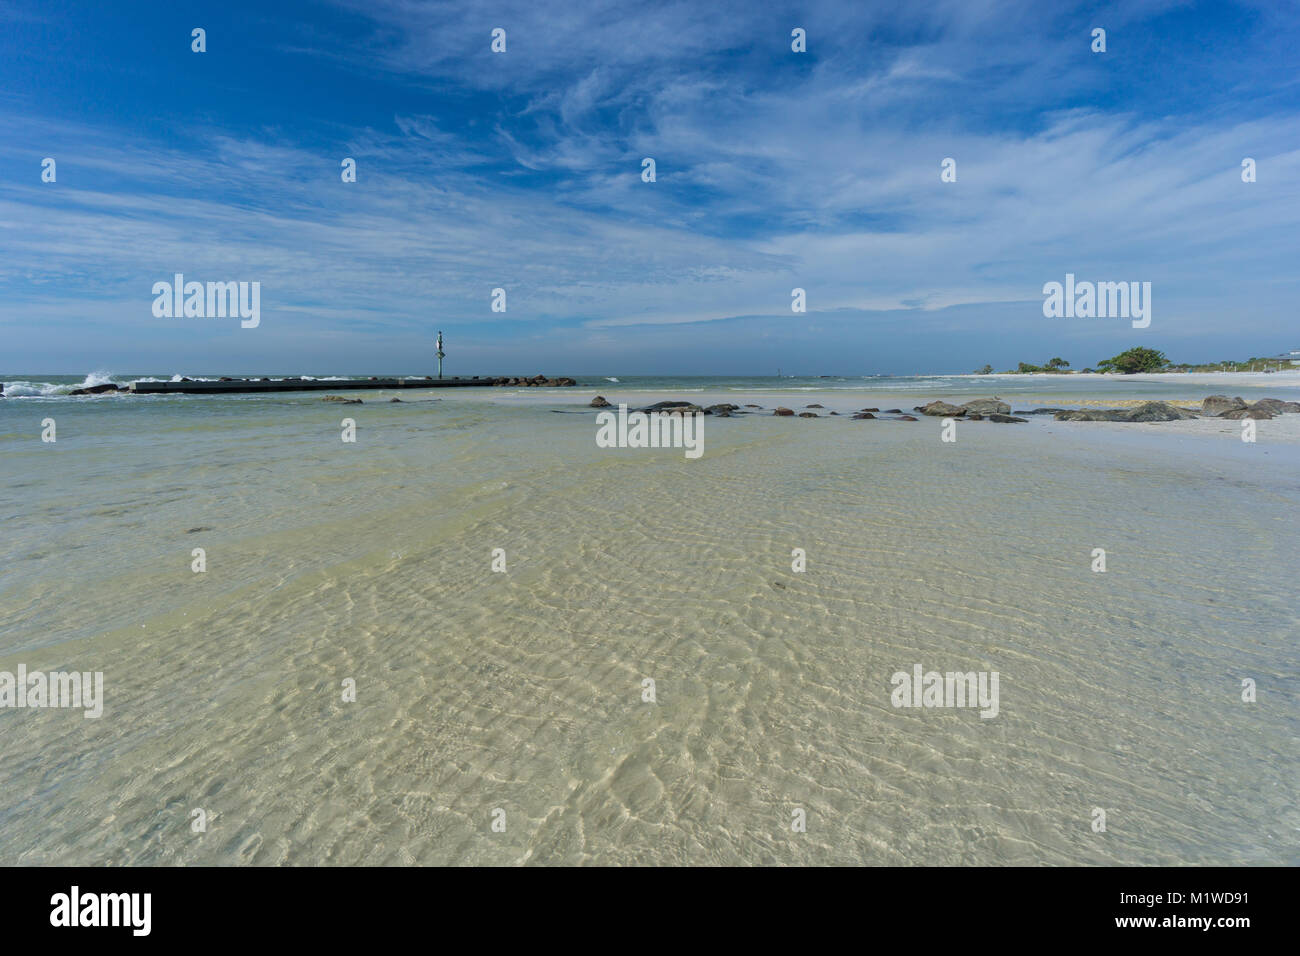 USA, Florida, kristallklares türkisfarbenes Wasser auf Honeymoon Island Strand Stockfoto